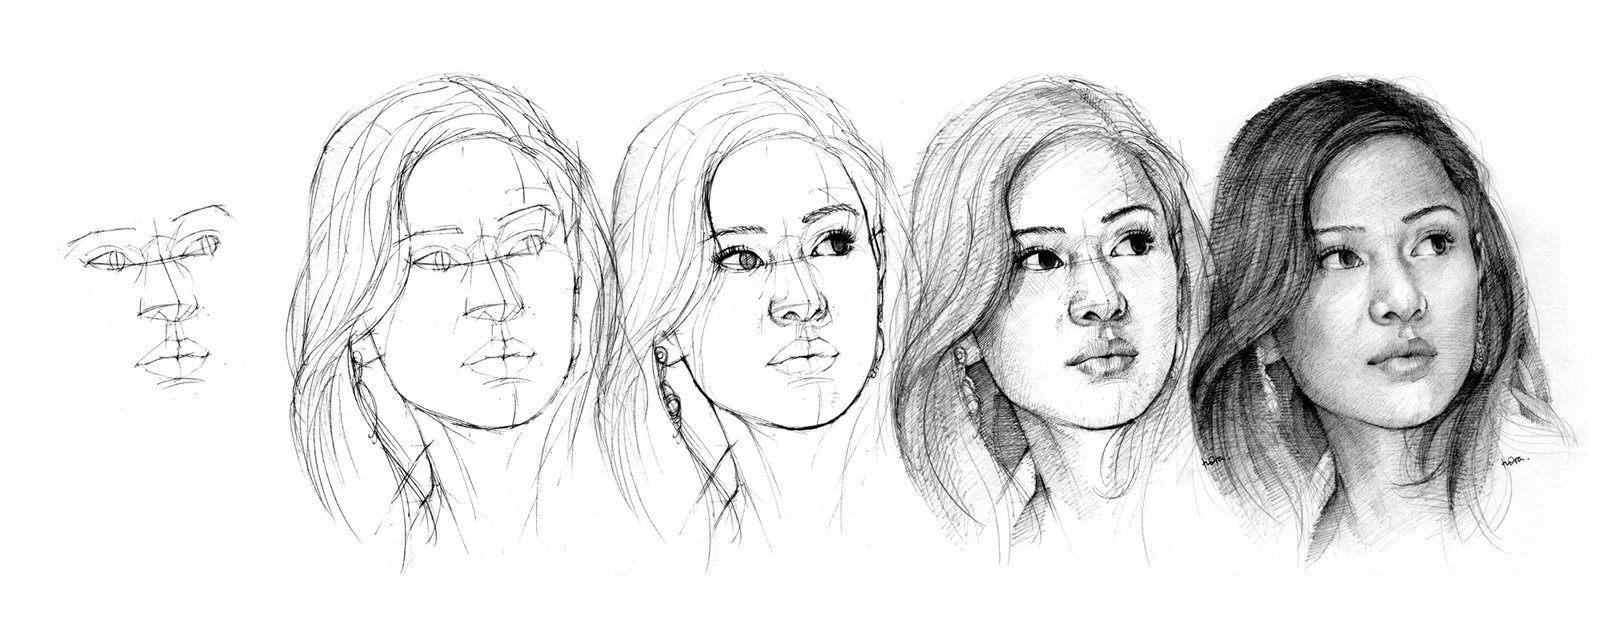 Belajar menggambar wajah bagian 2 Kumpulan ide ide kreatif dan iniovatif